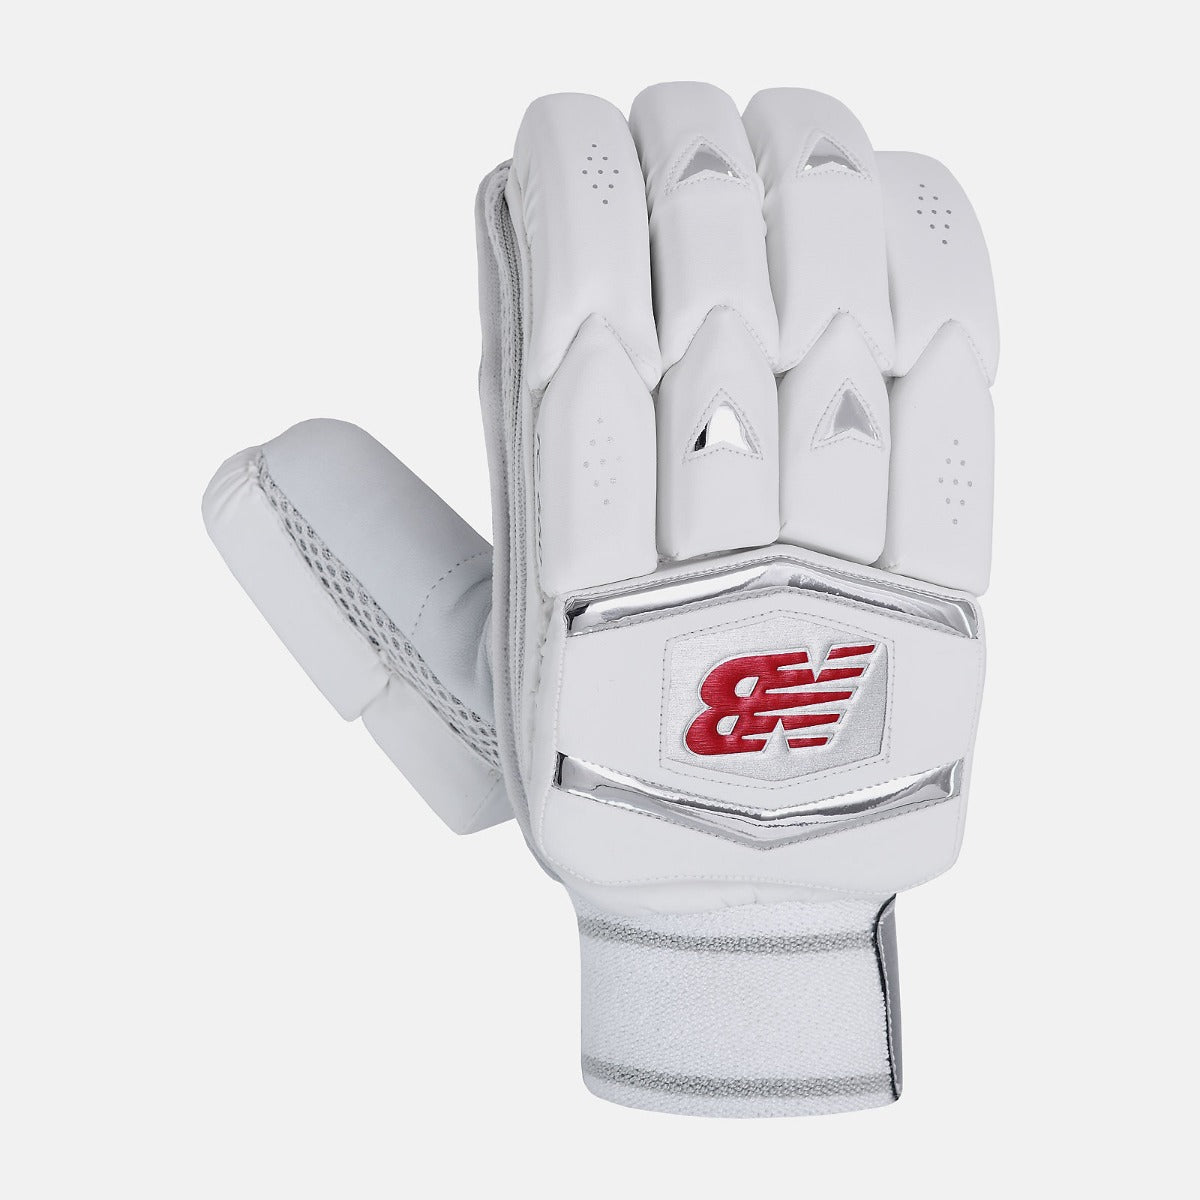 New Balance TC 660 Gloves - White/Red